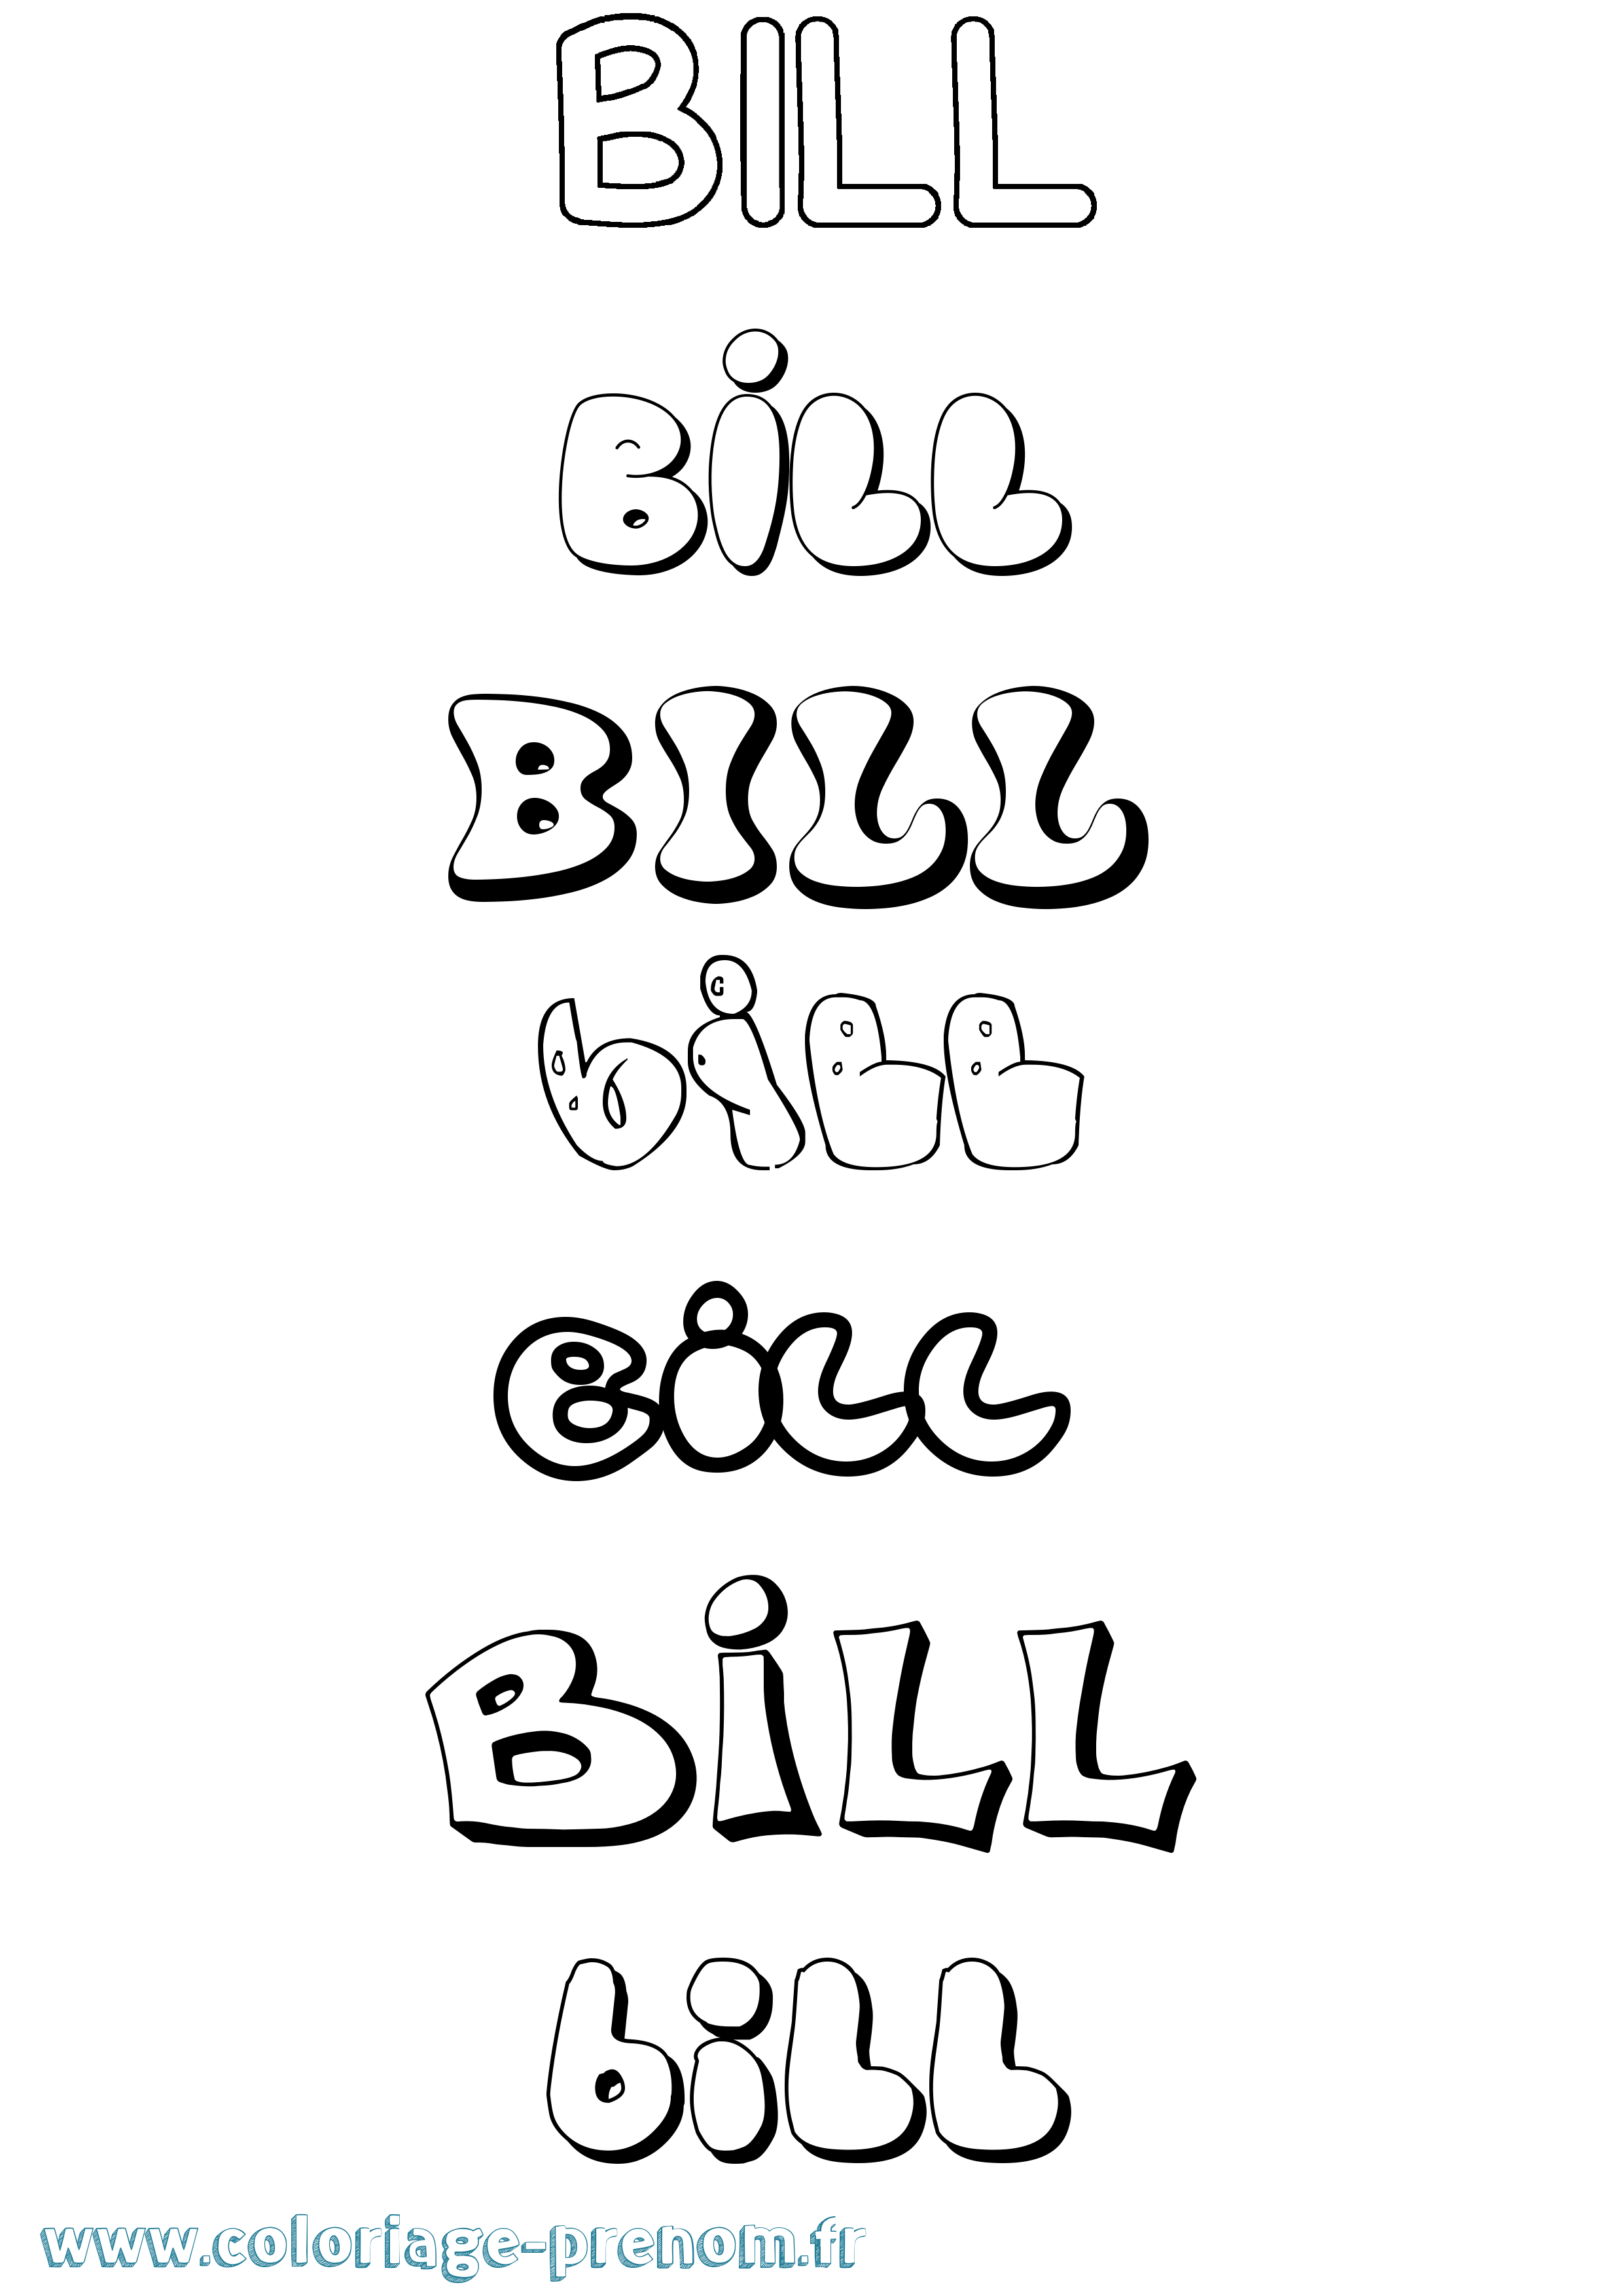 Coloriage prénom Bill Bubble